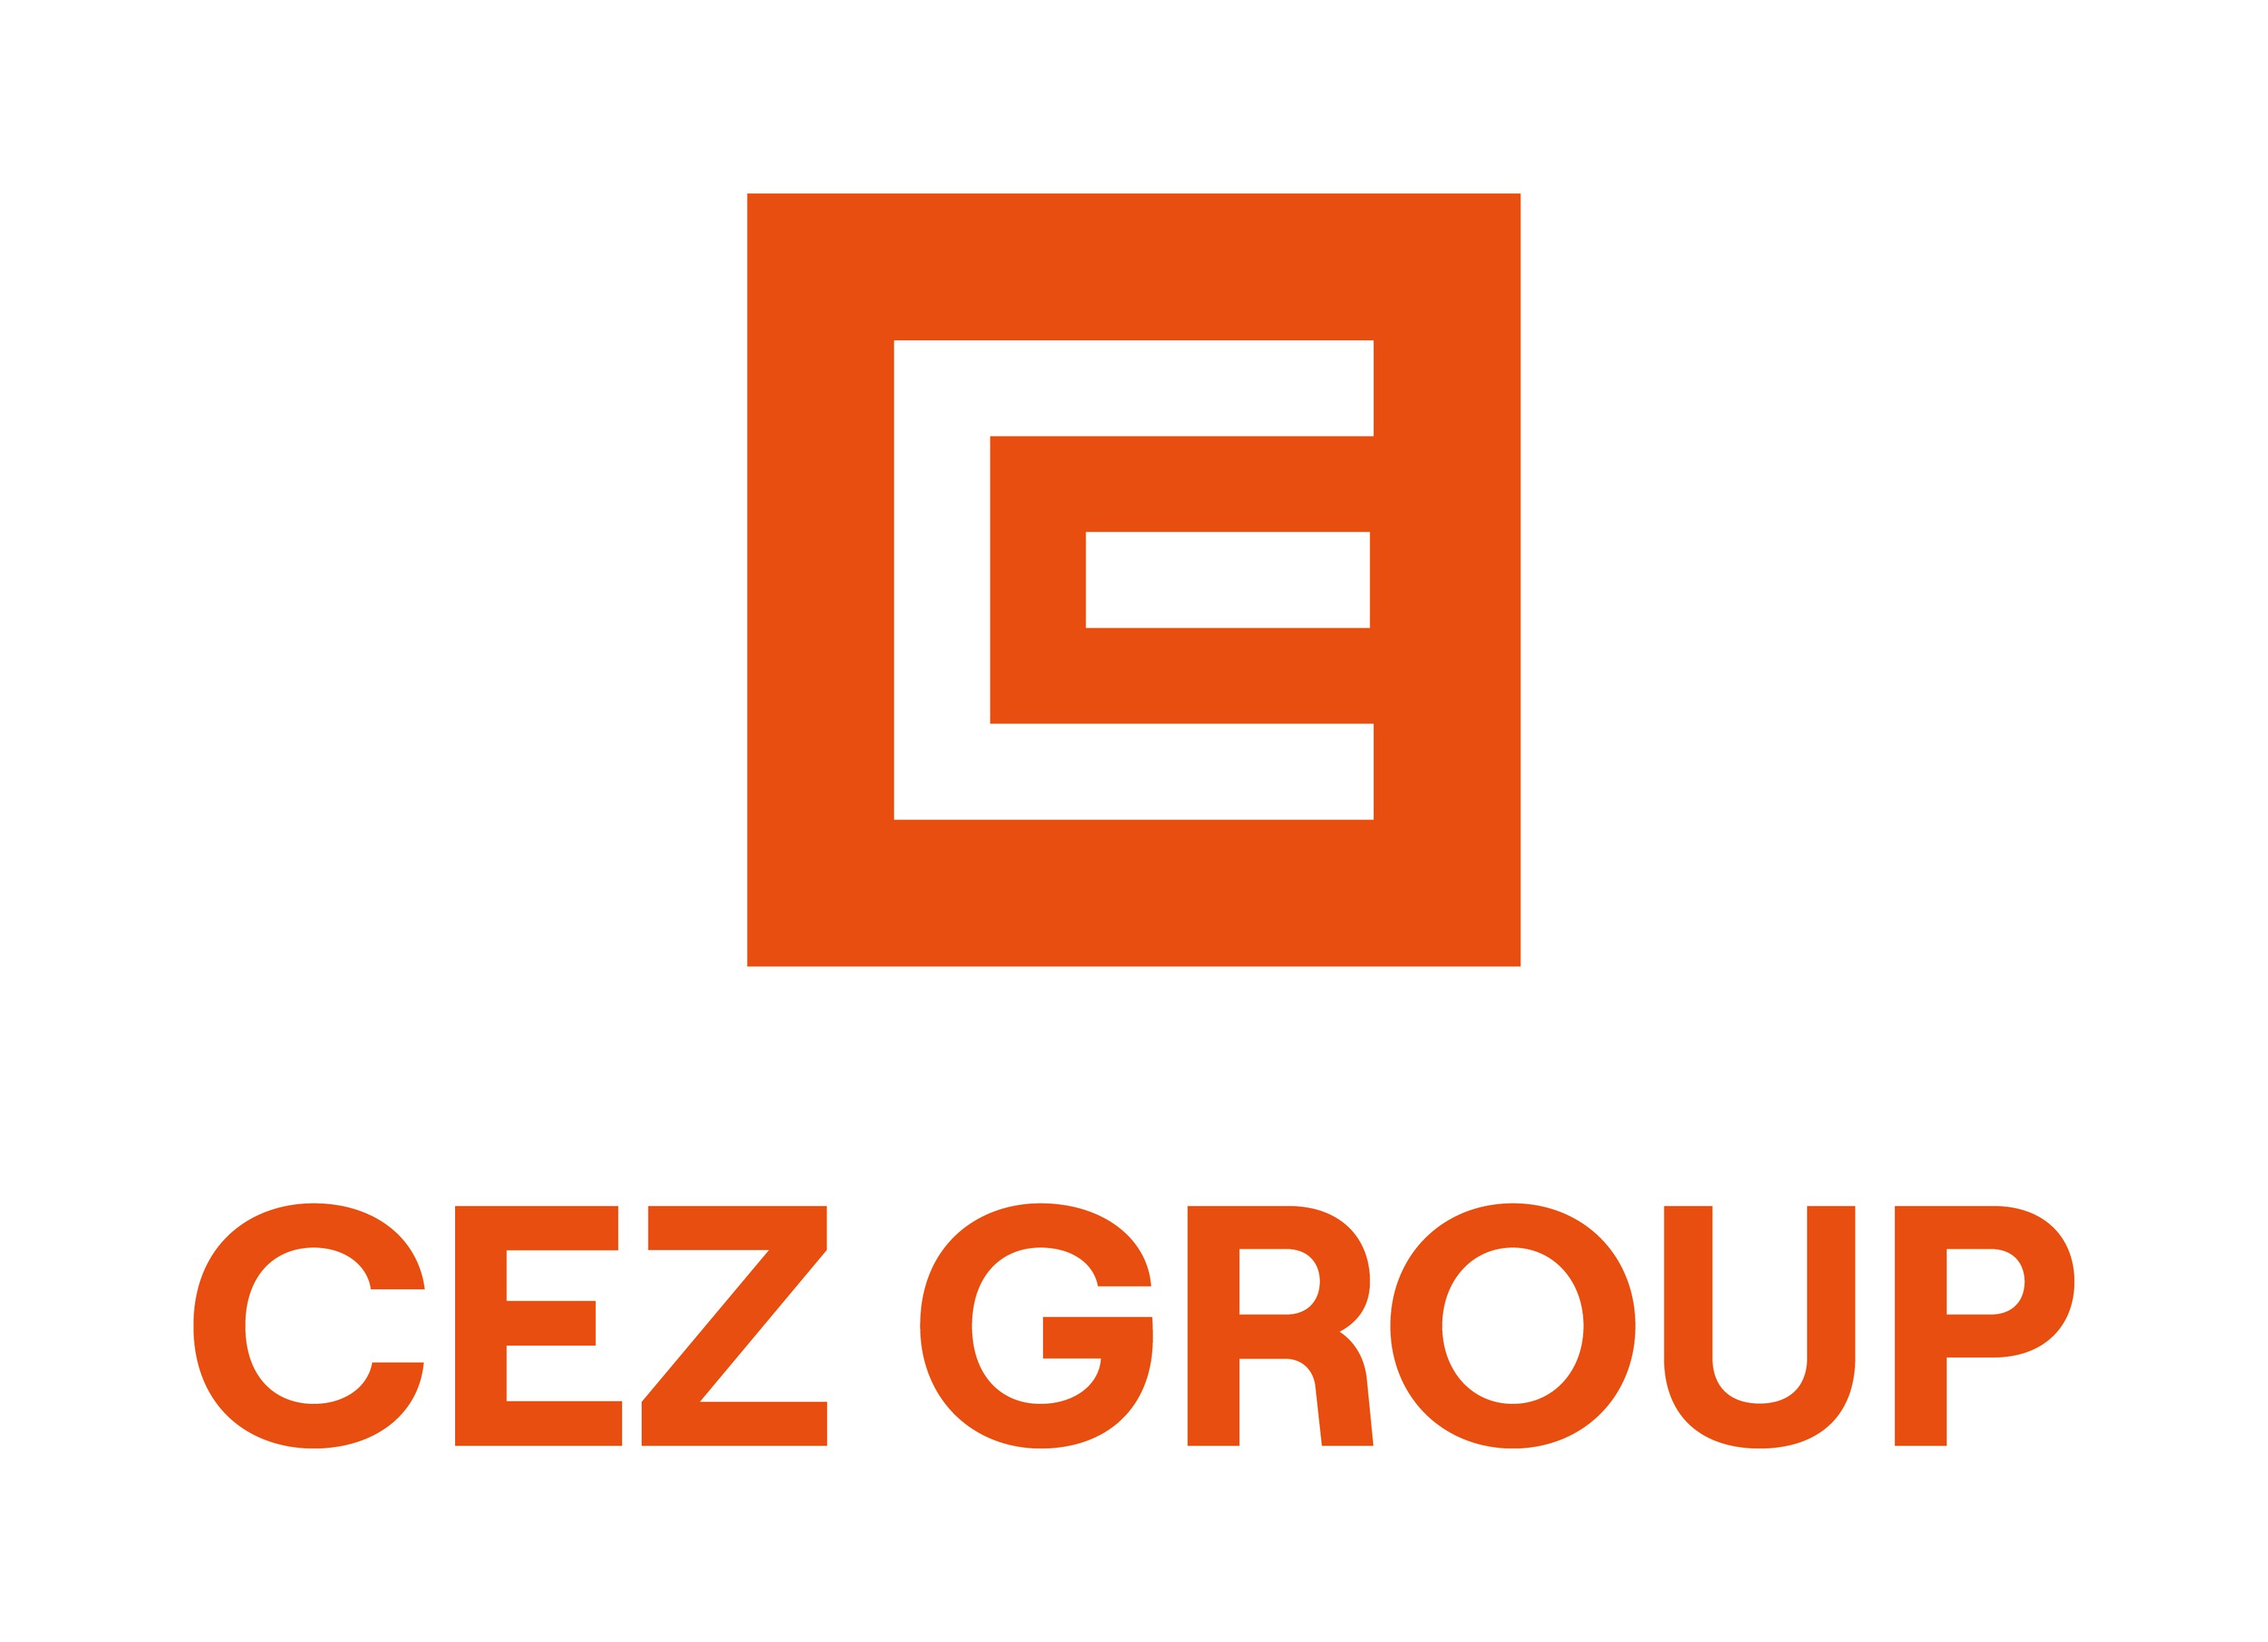 Cez-group logo_10 2022